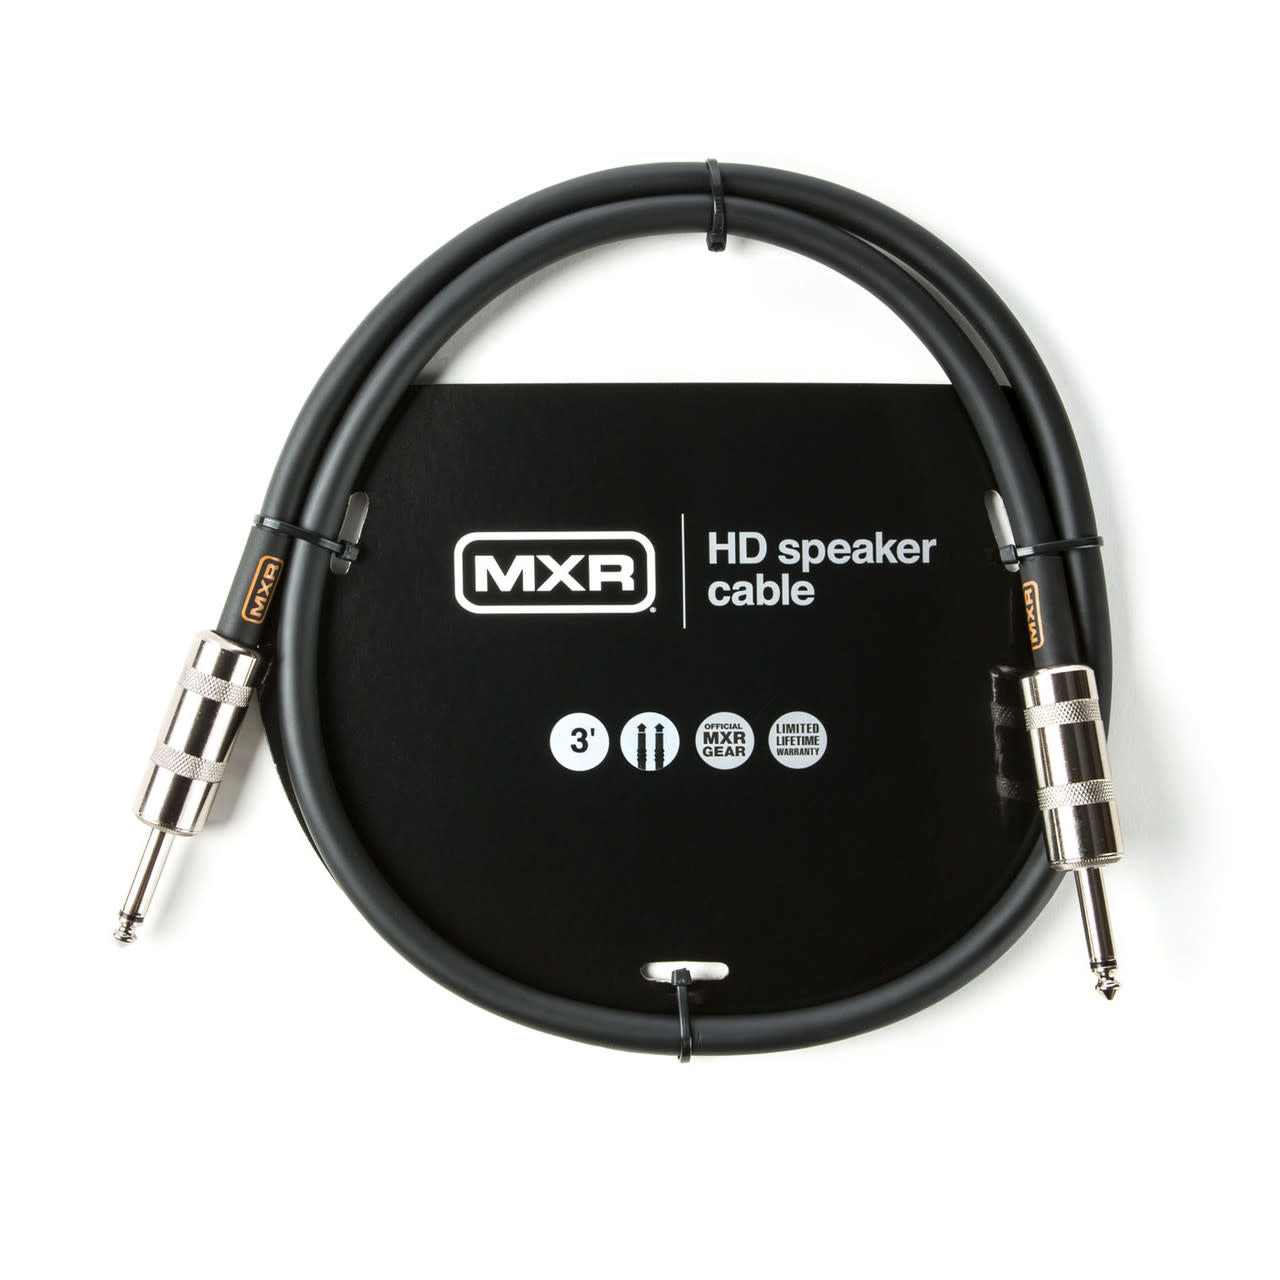 MXR 3 Ft HD Speaker Cable